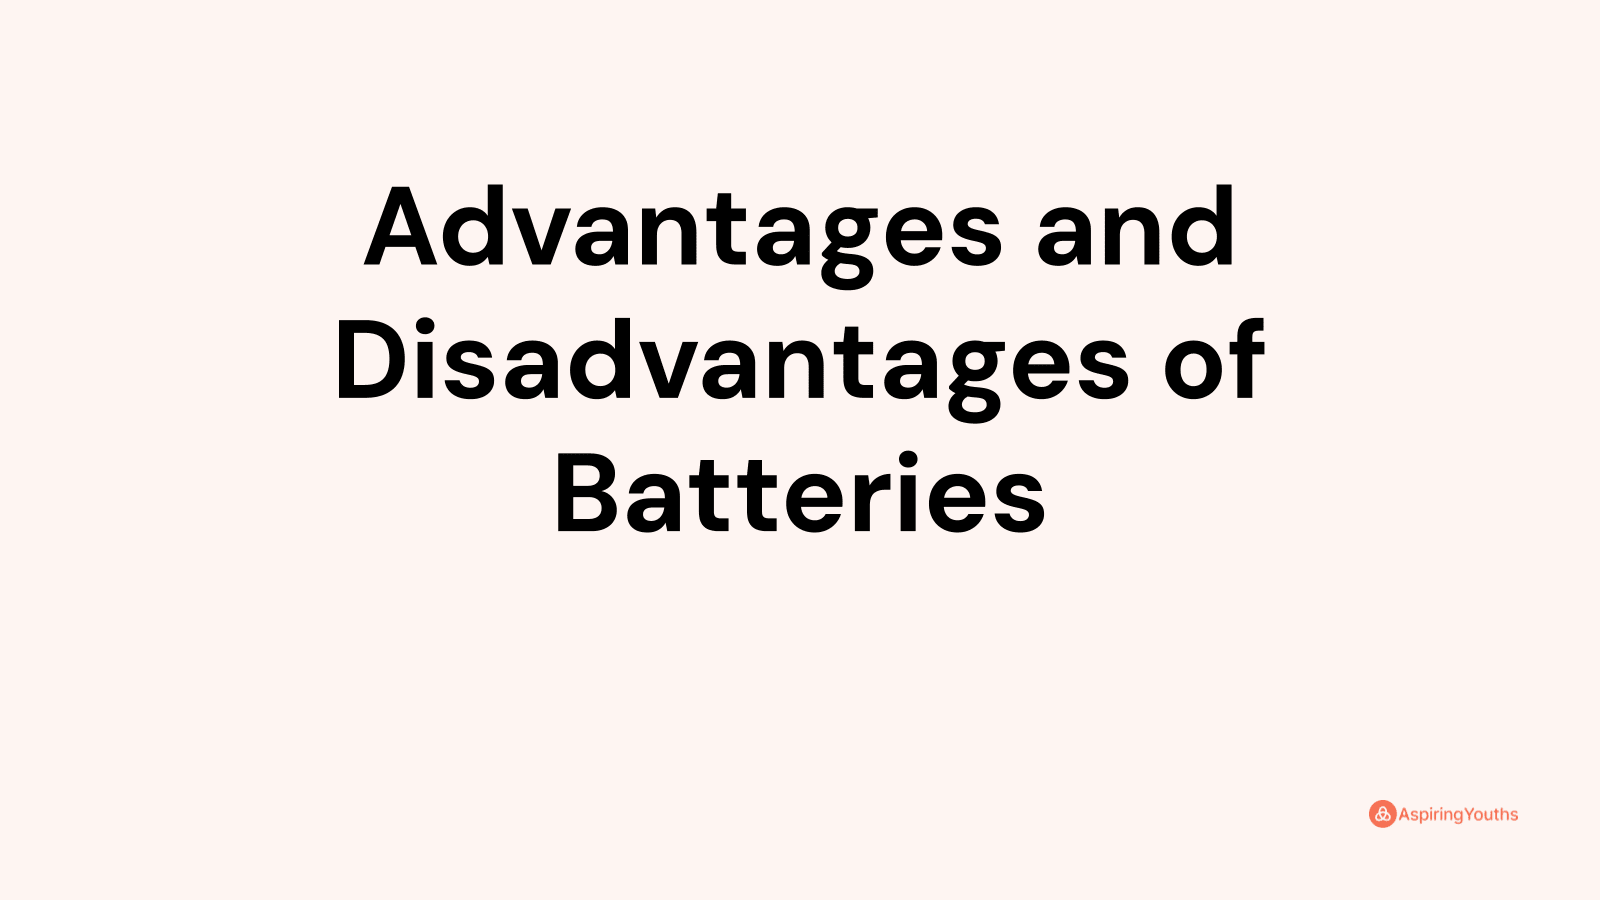 Advantages and disadvantages of Batteries